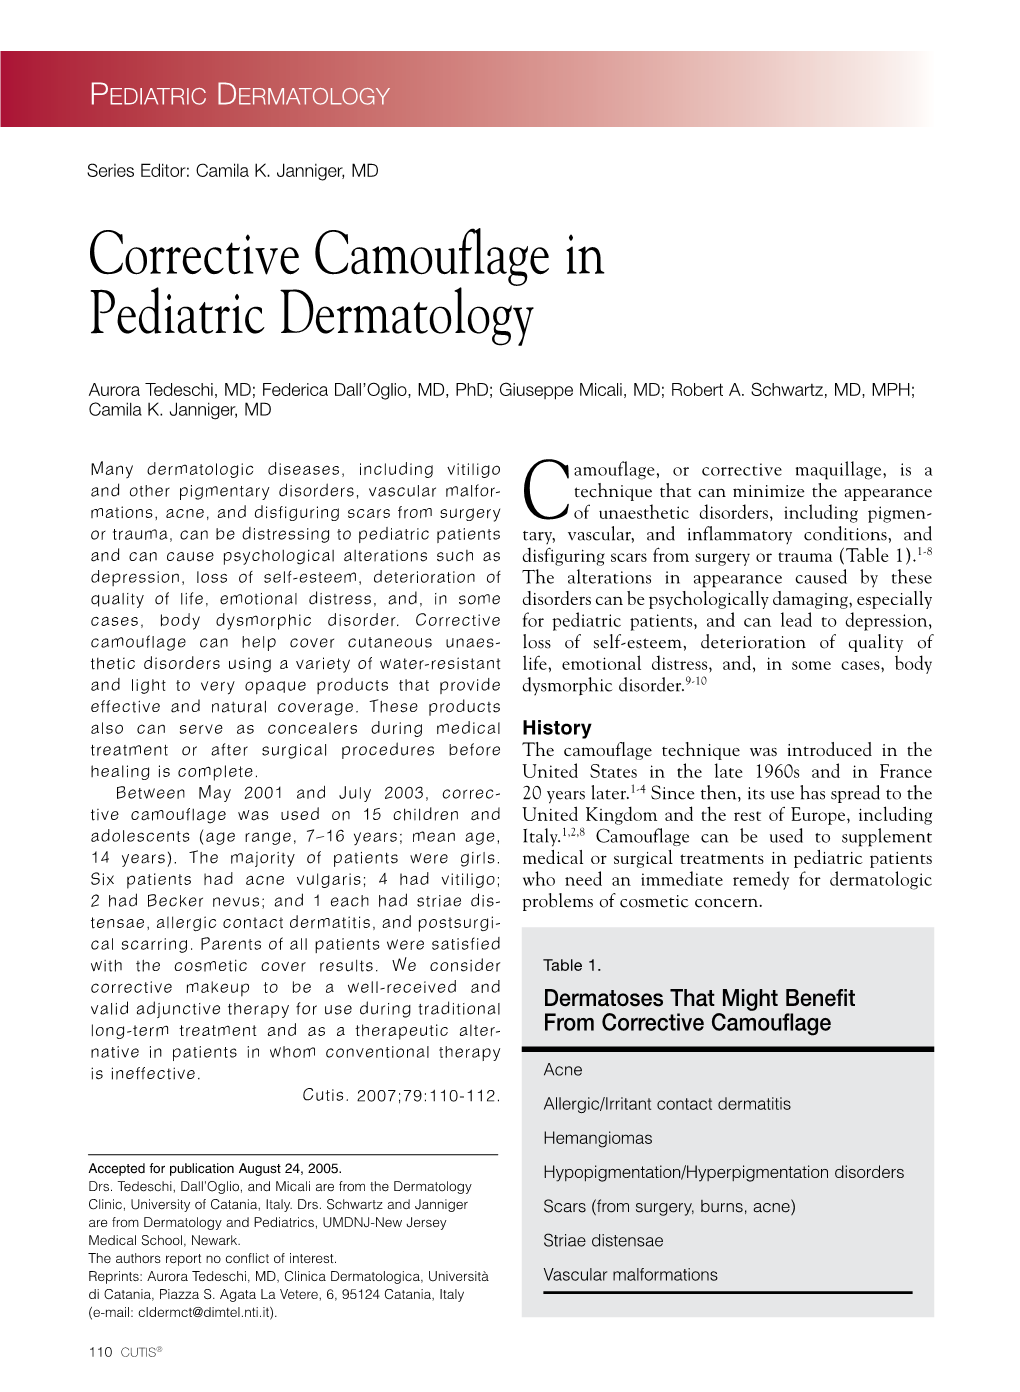 Corrective Camouflage in Pediatric Dermatology